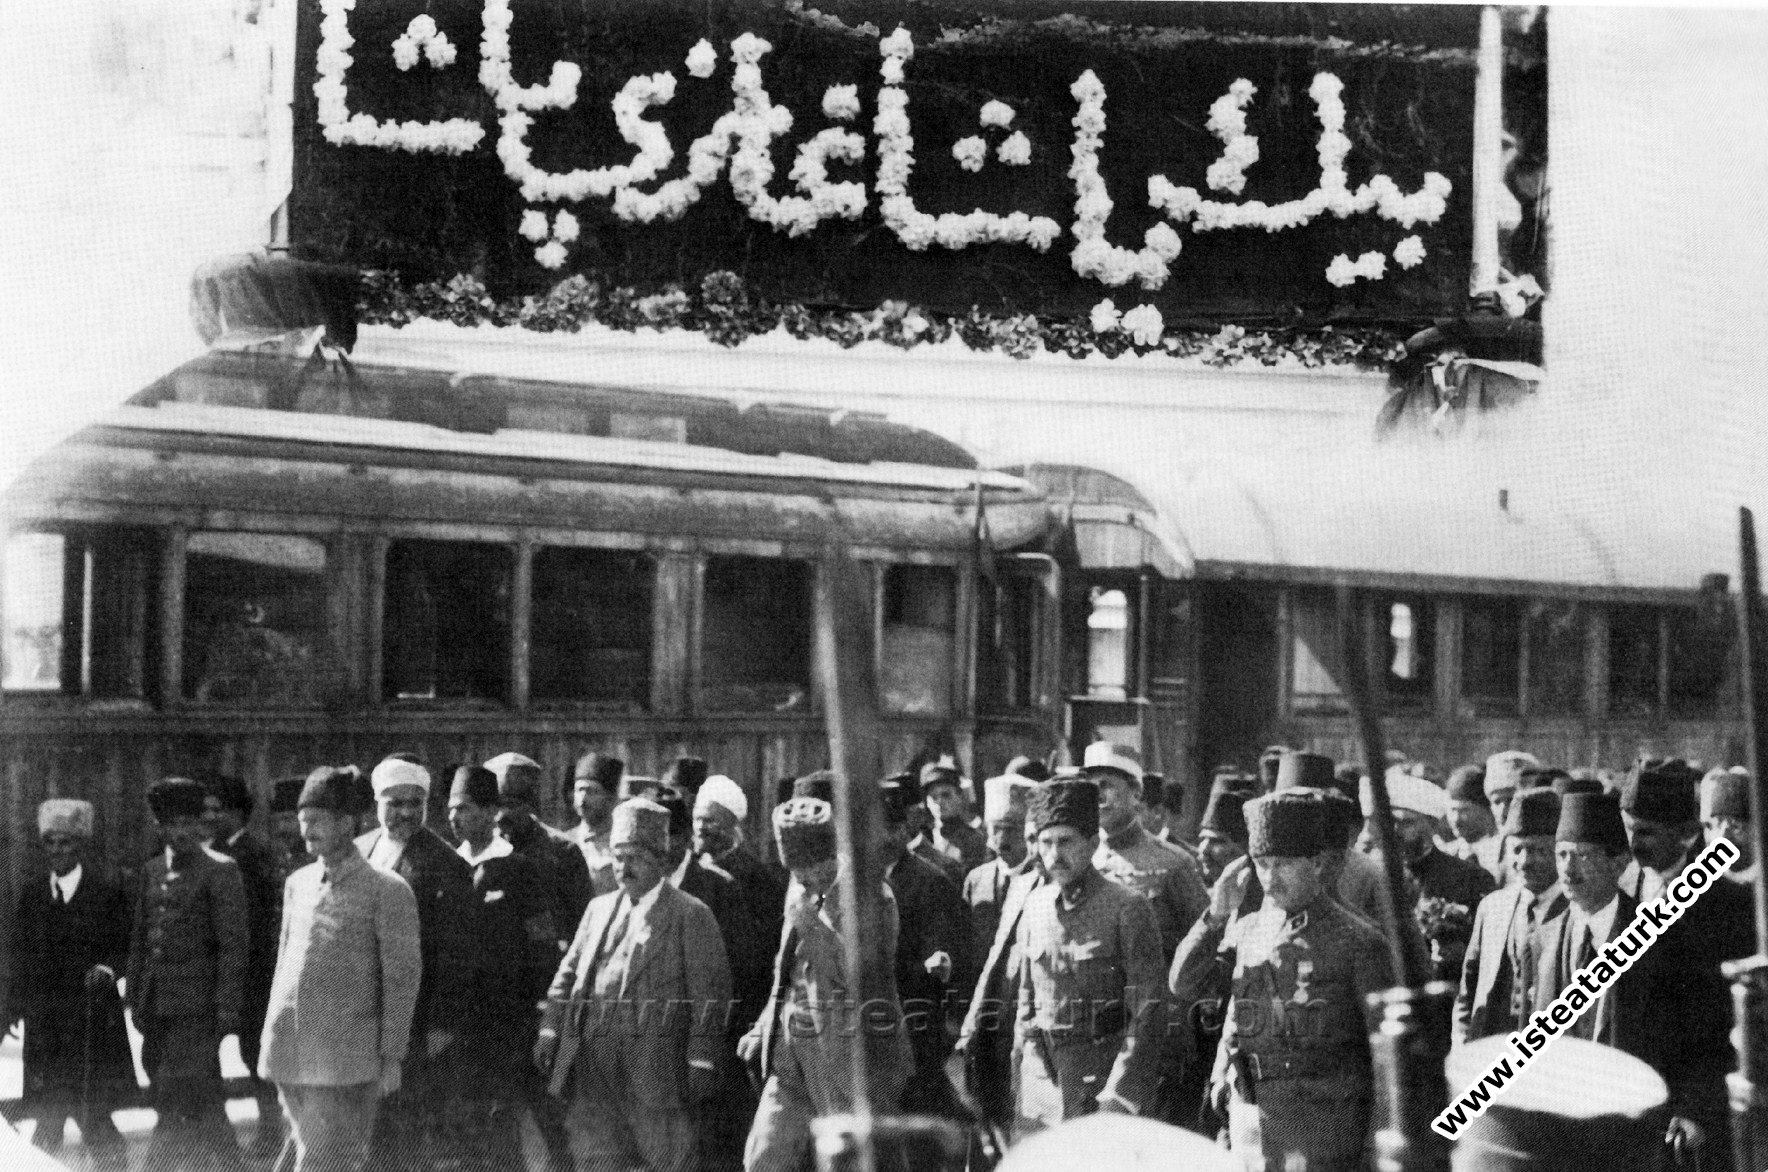 Başkomutan Gazi Mustafa Kemal'in Ankara'da karşılanması, Gazi Paşa çok yaşa pankartı asılmış. (02.10.1922)